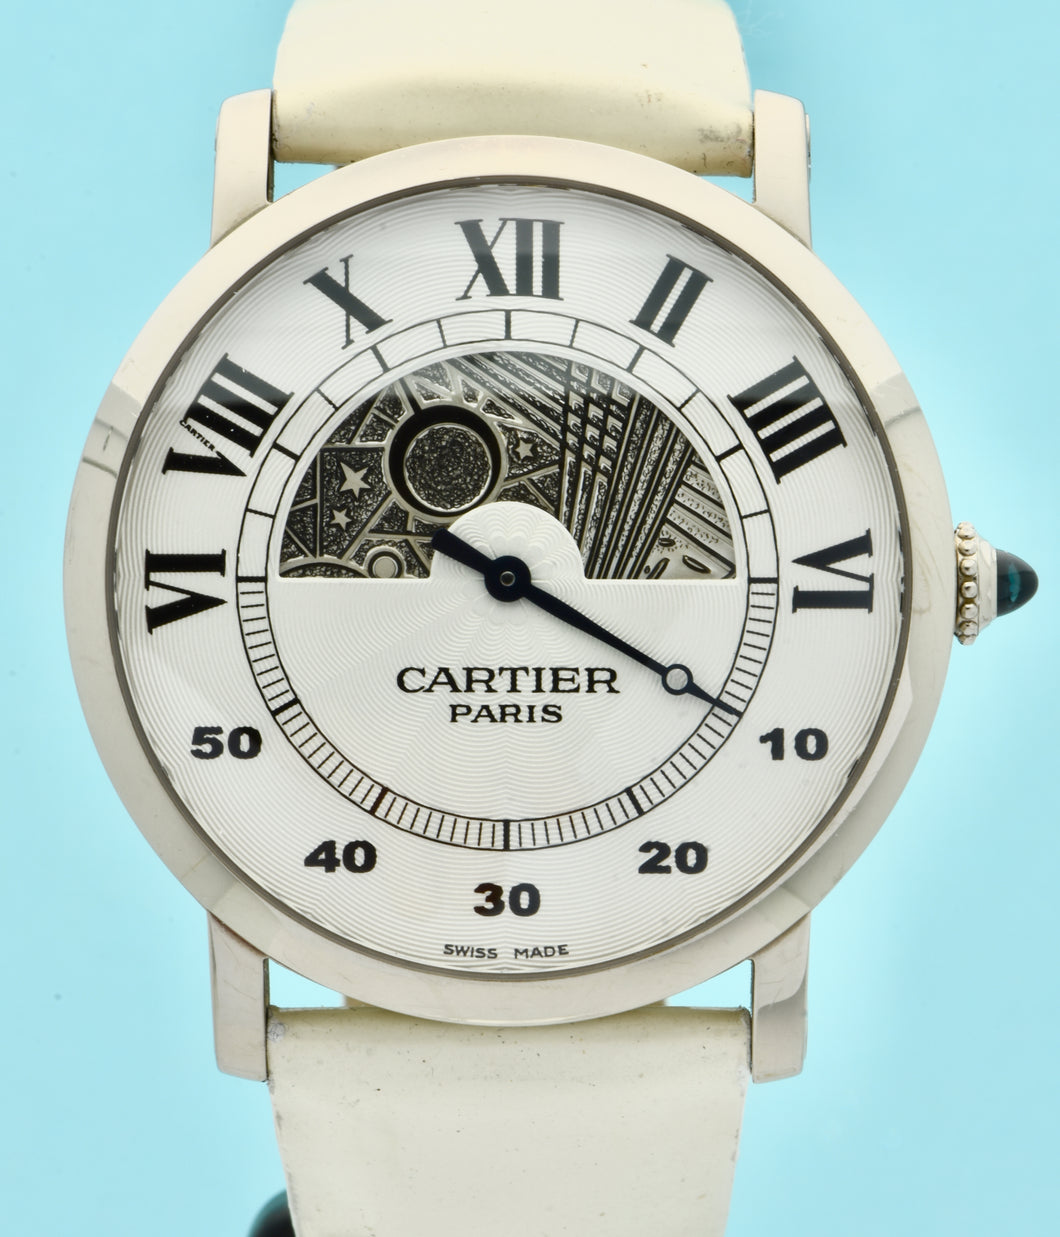 Cartier “CPCP” Rotonde de Cartier in White Gold, Ref. 2873 I